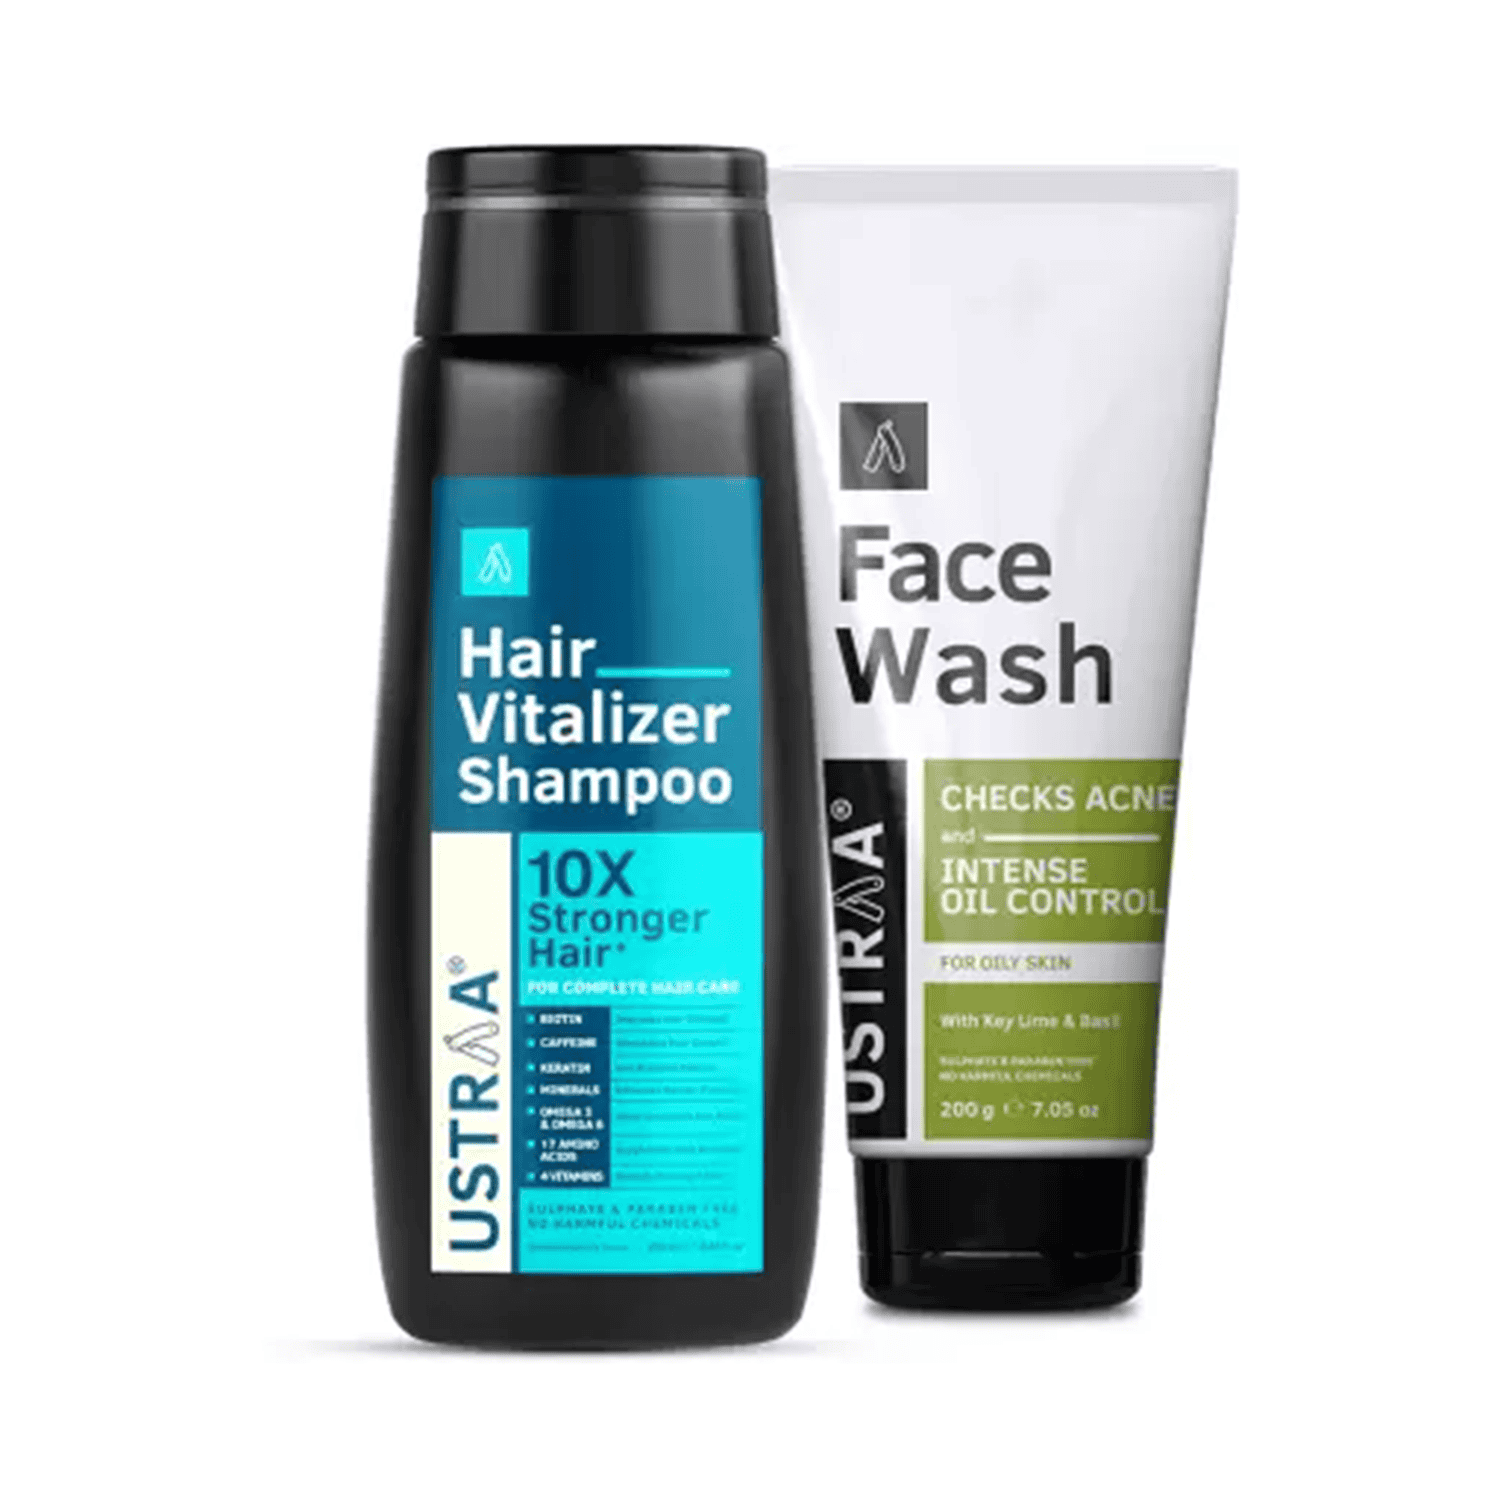 Ustraa Hair Vitalizer Shampoo & Face Wash Oily Skin Combo